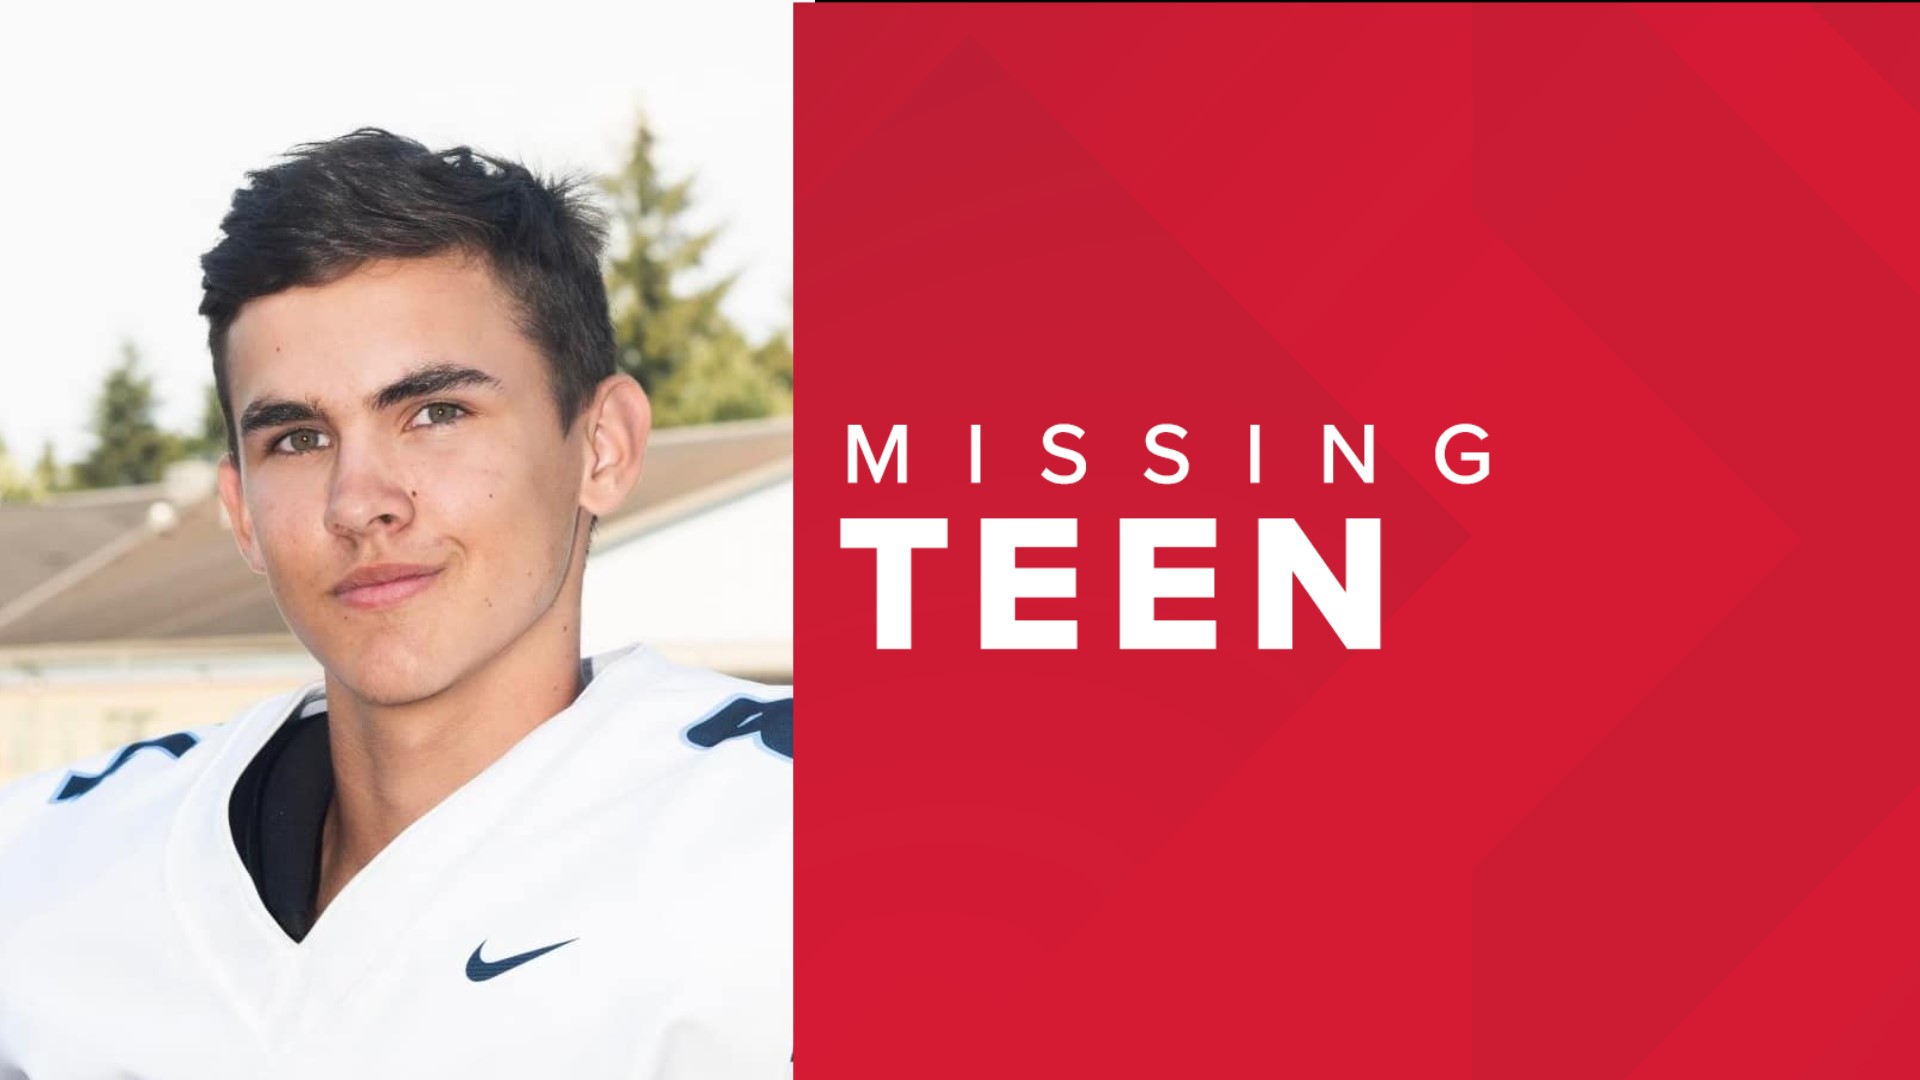 Olympia teen missing under ‘suspicious circumstances’